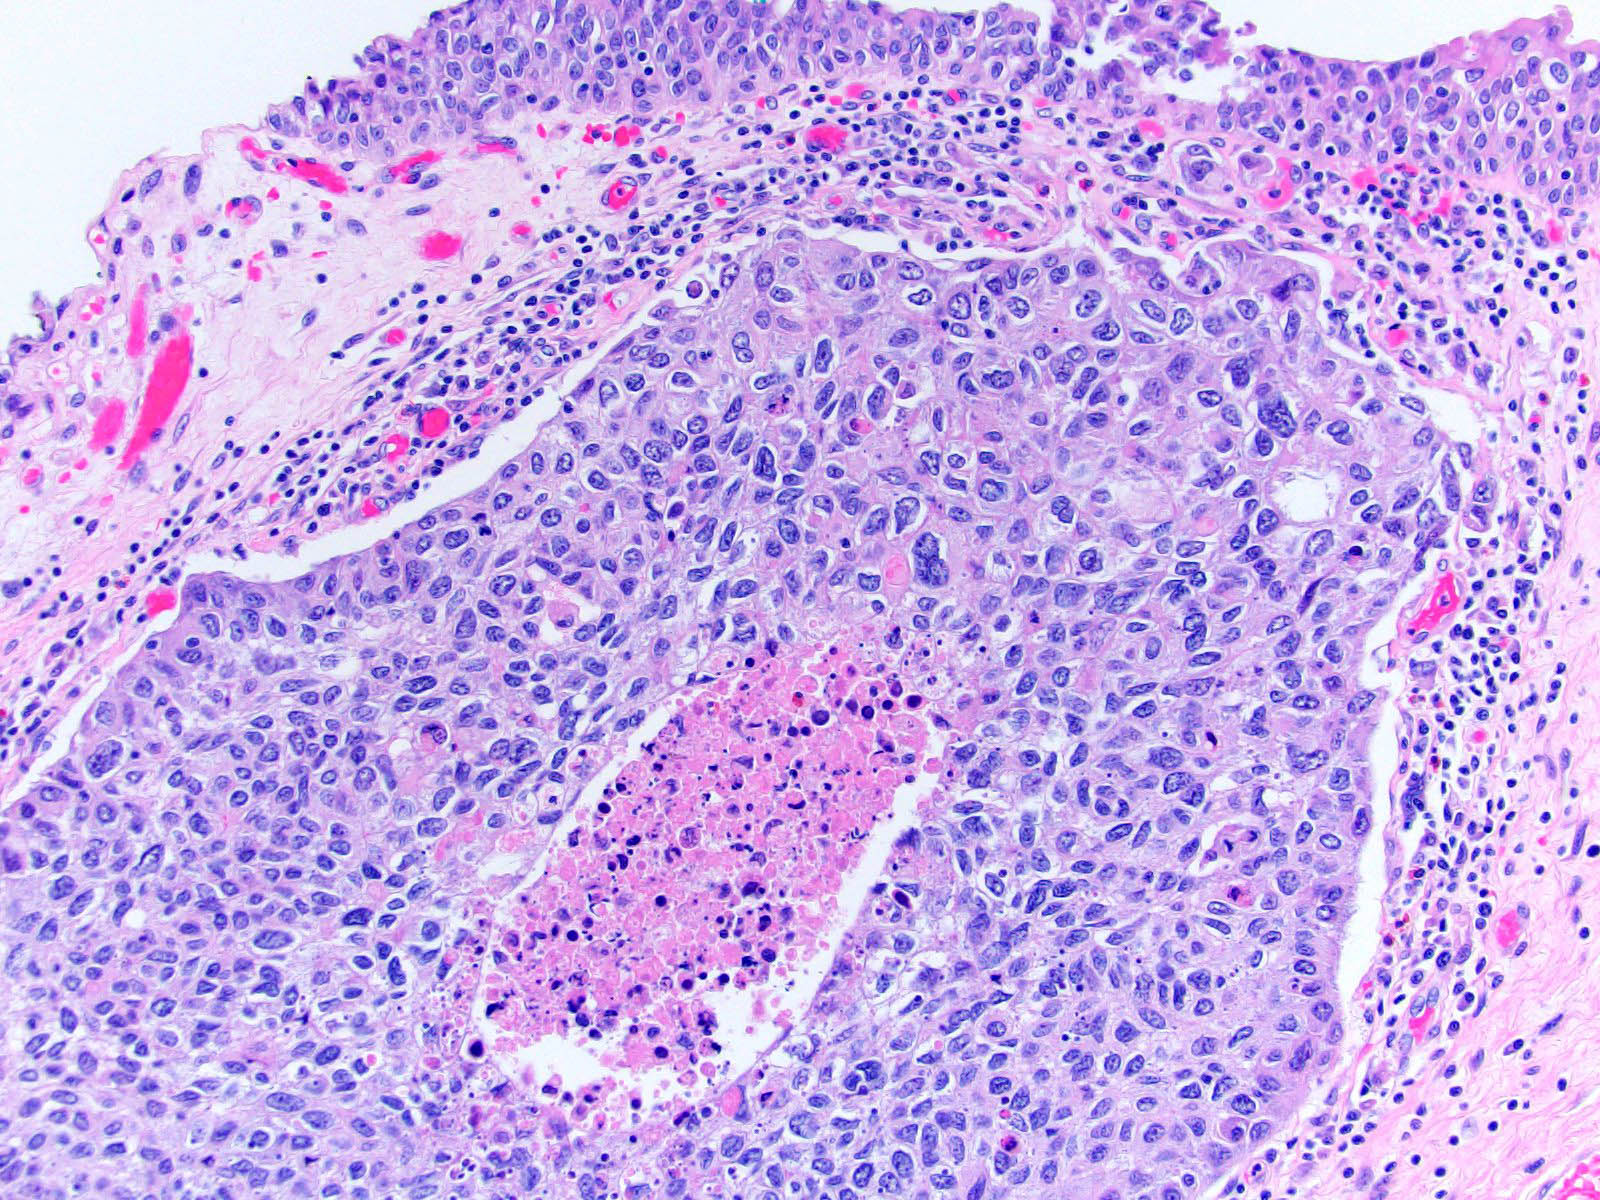 Invasive urothelial carcinoma with comedo necrosis